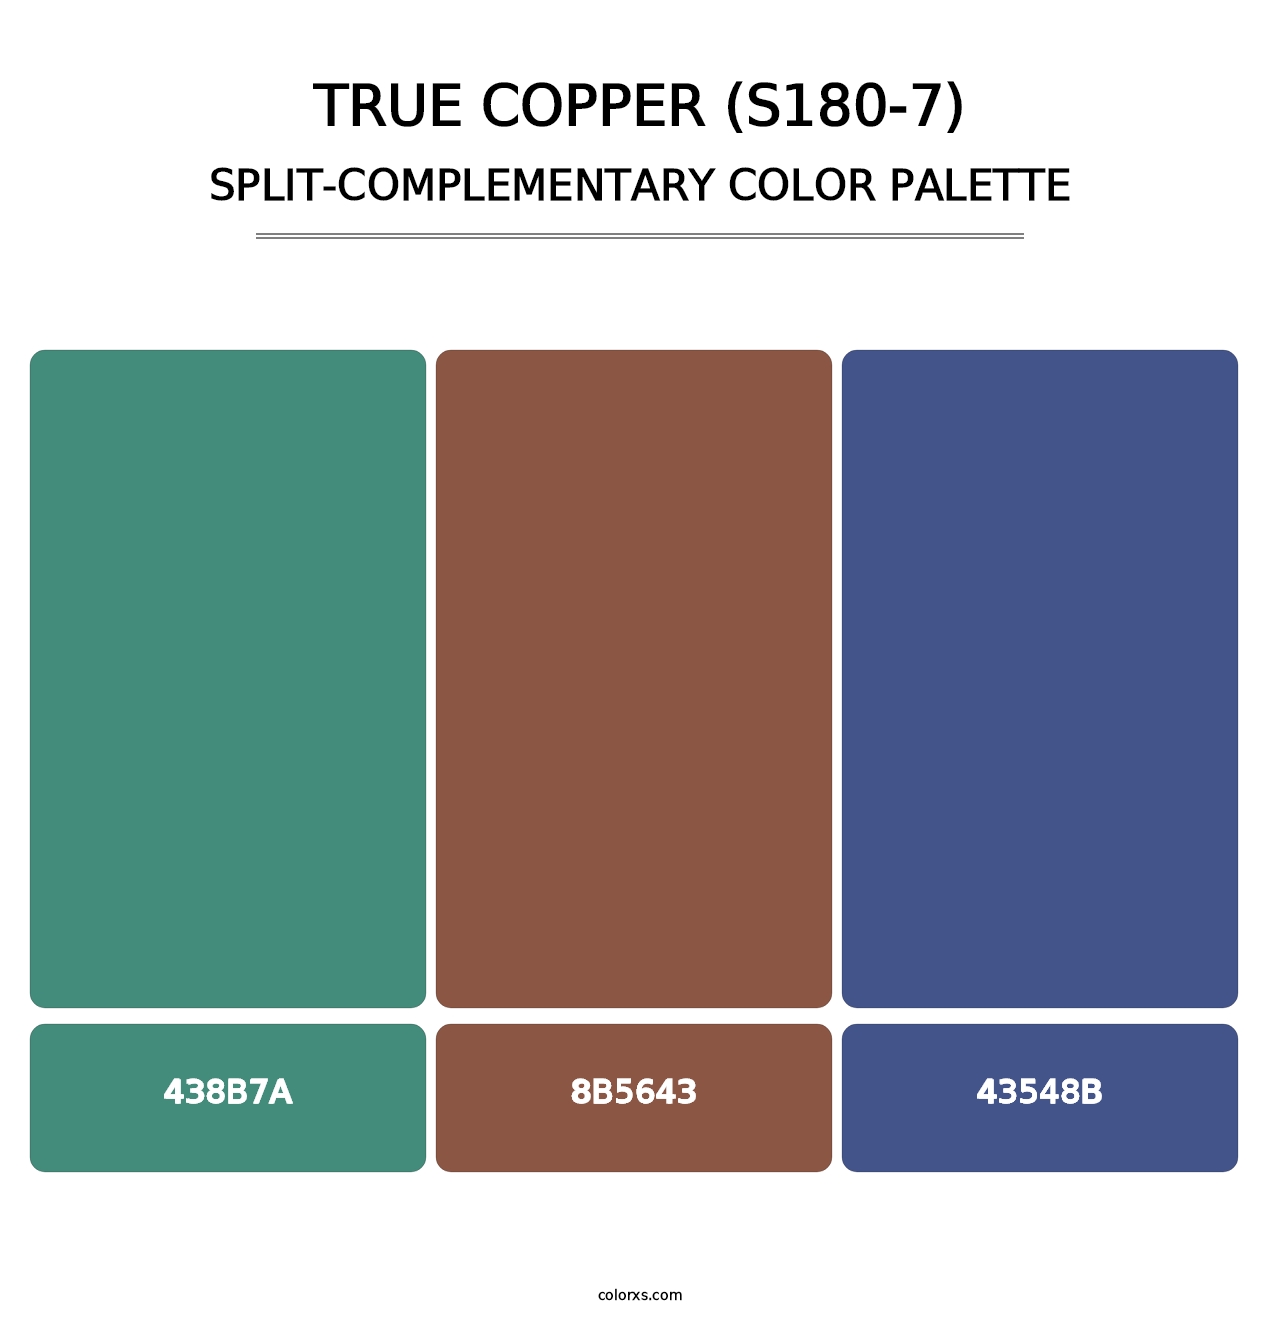 True Copper (S180-7) - Split-Complementary Color Palette